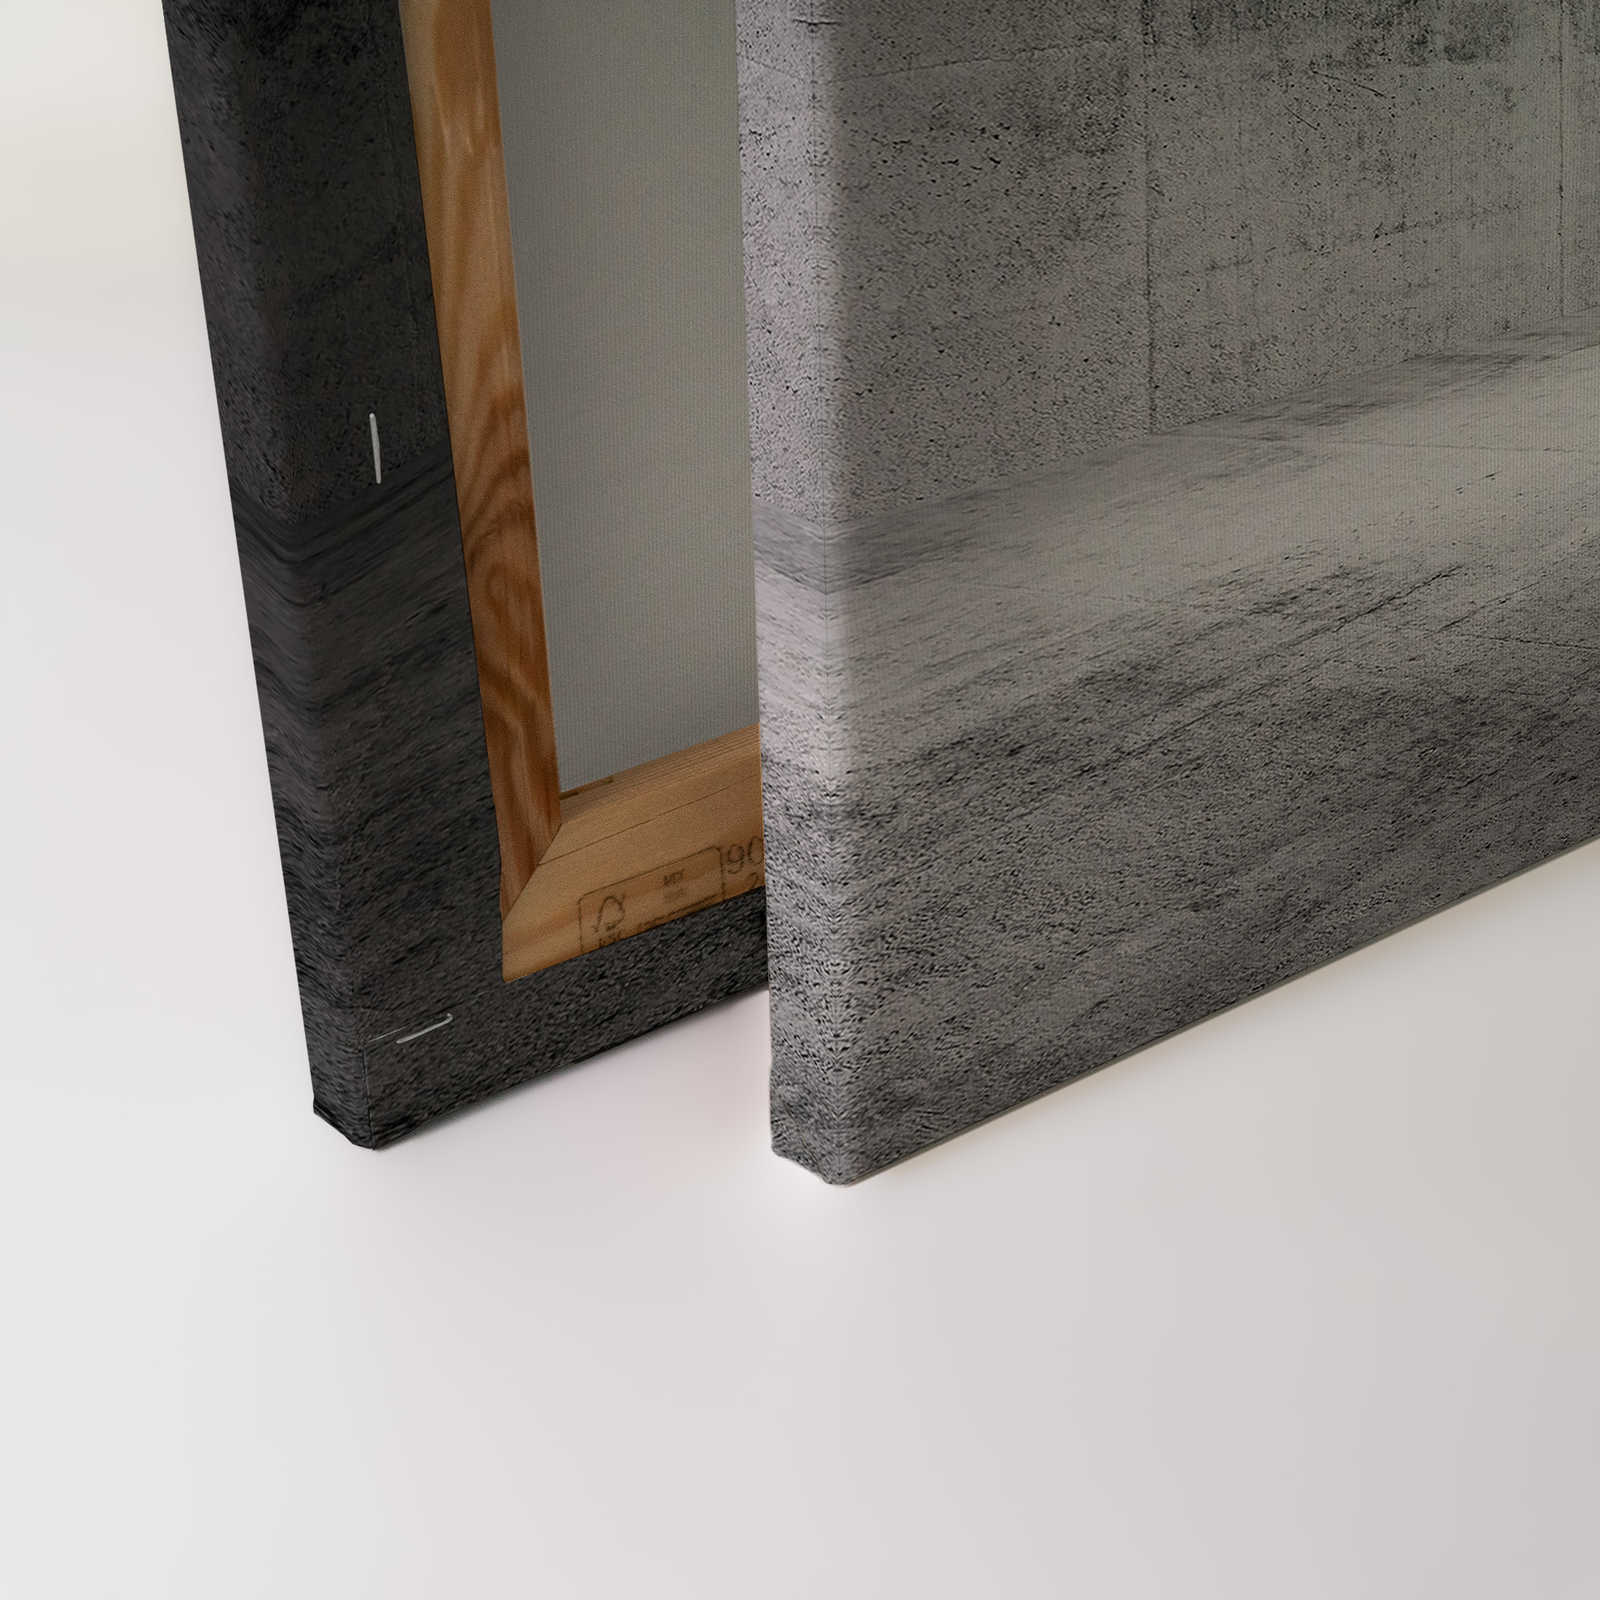             Canvas painting Concrete Room with 3D effect - 0.90 m x 0.60 m
        